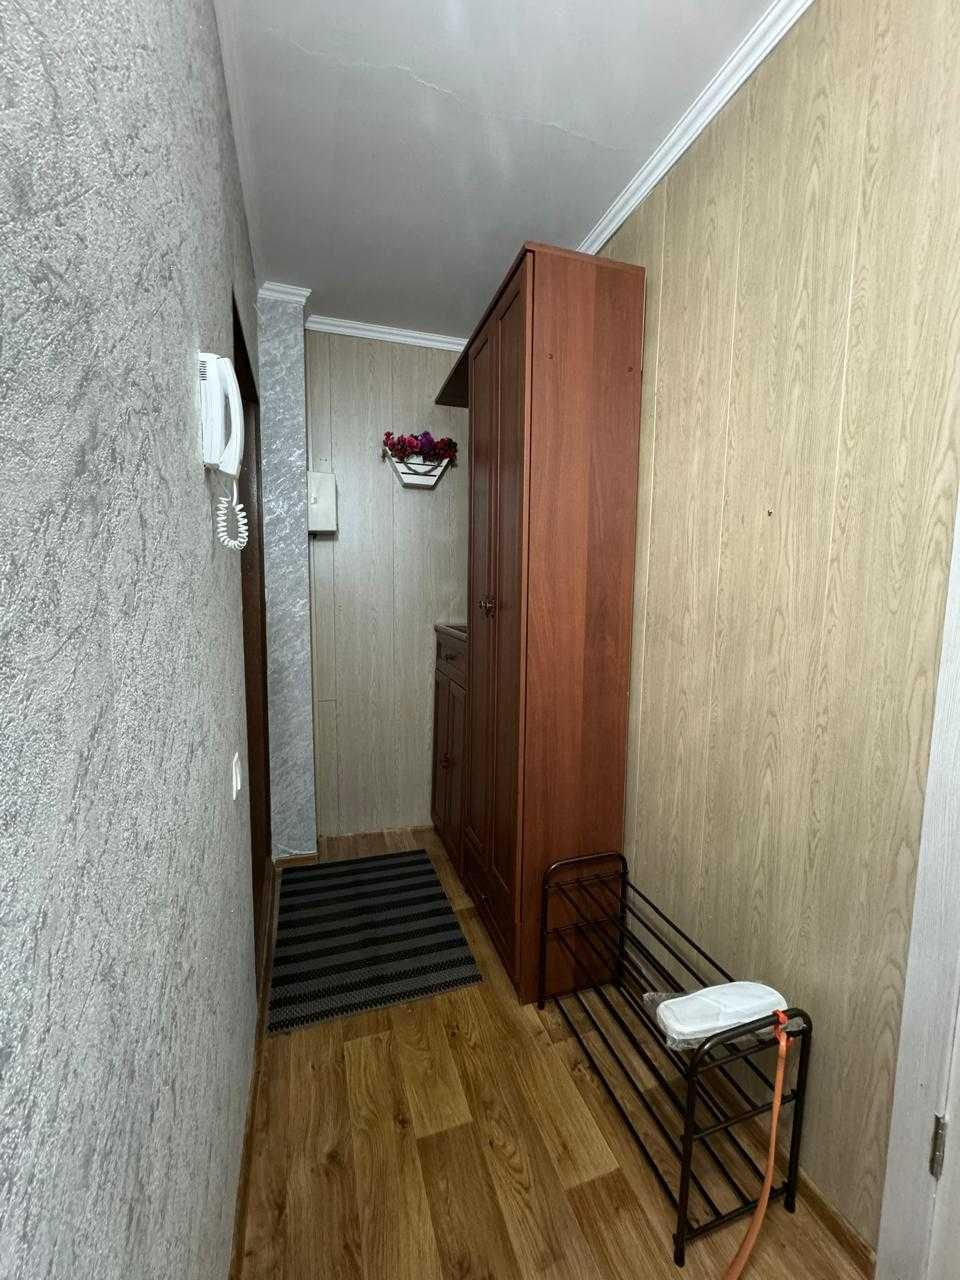 Cдаем 2-х комнатную квартиру в центре города ул.Комиссарова